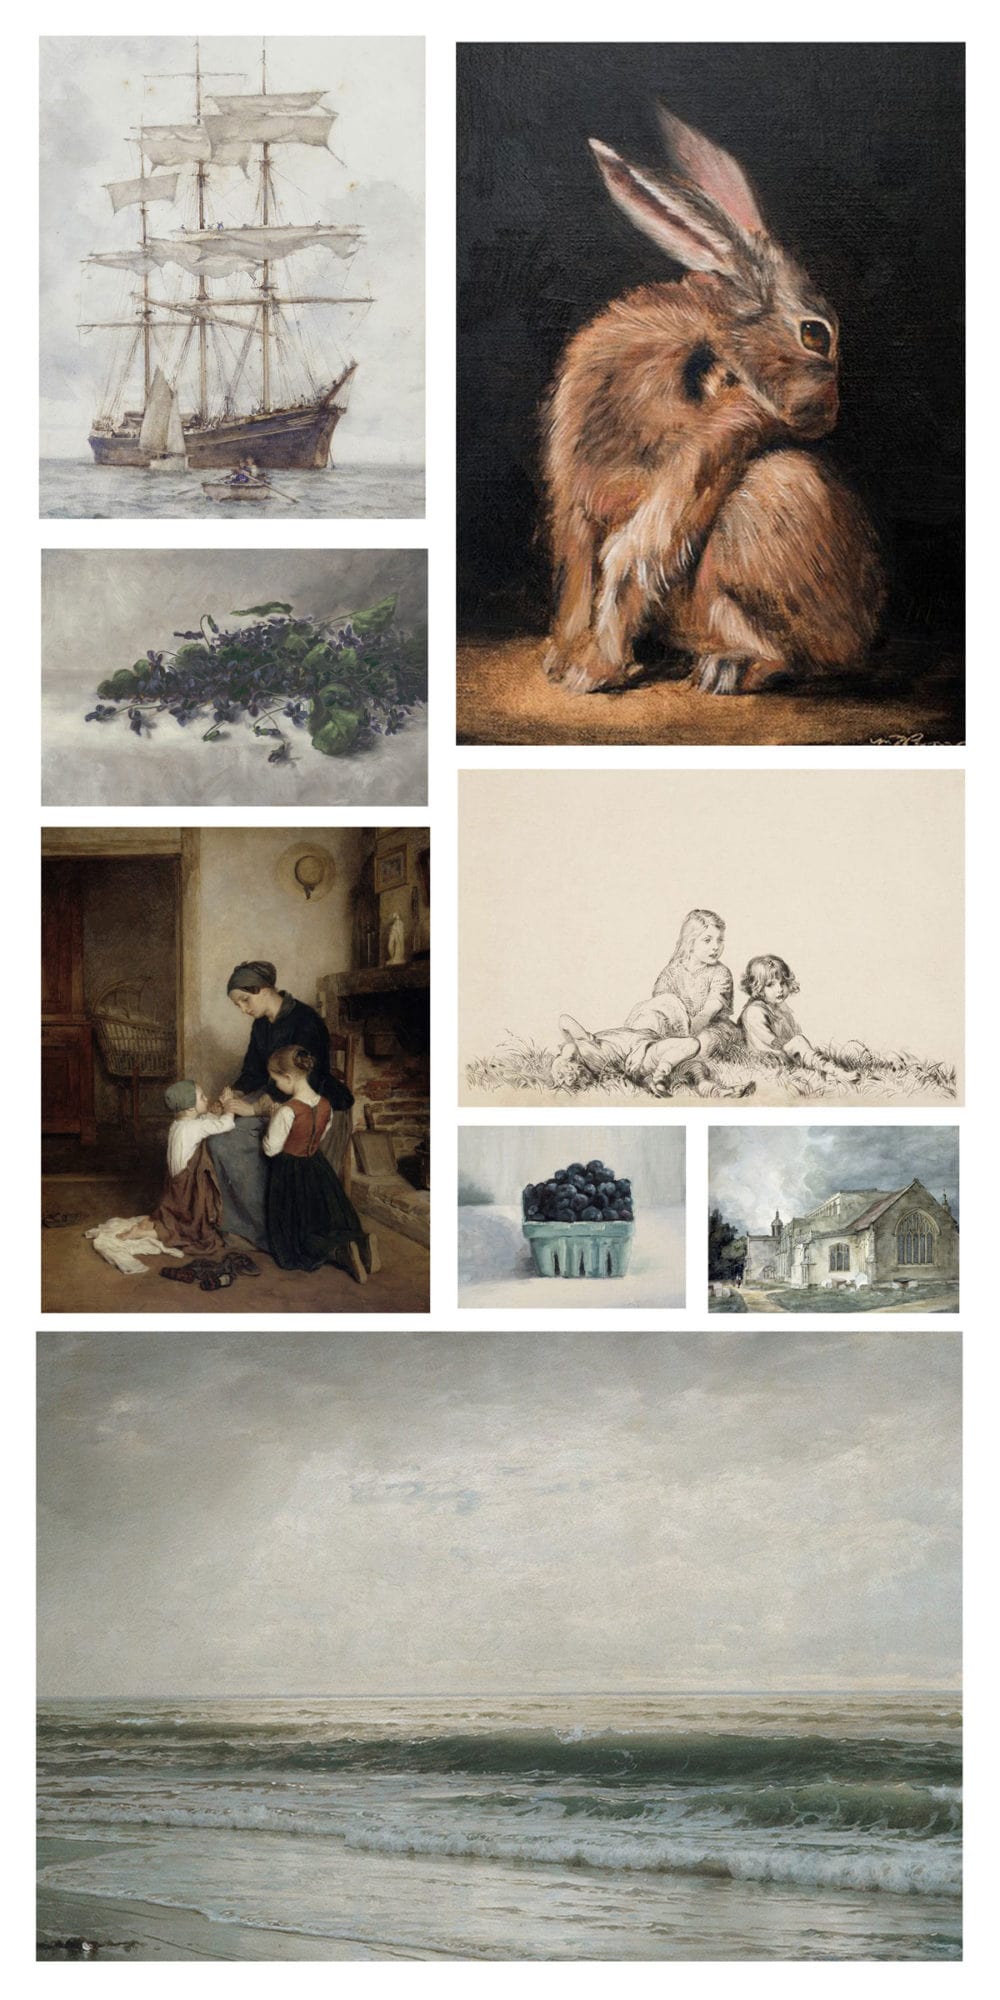 collage showing seven pieces of original vintage artwork